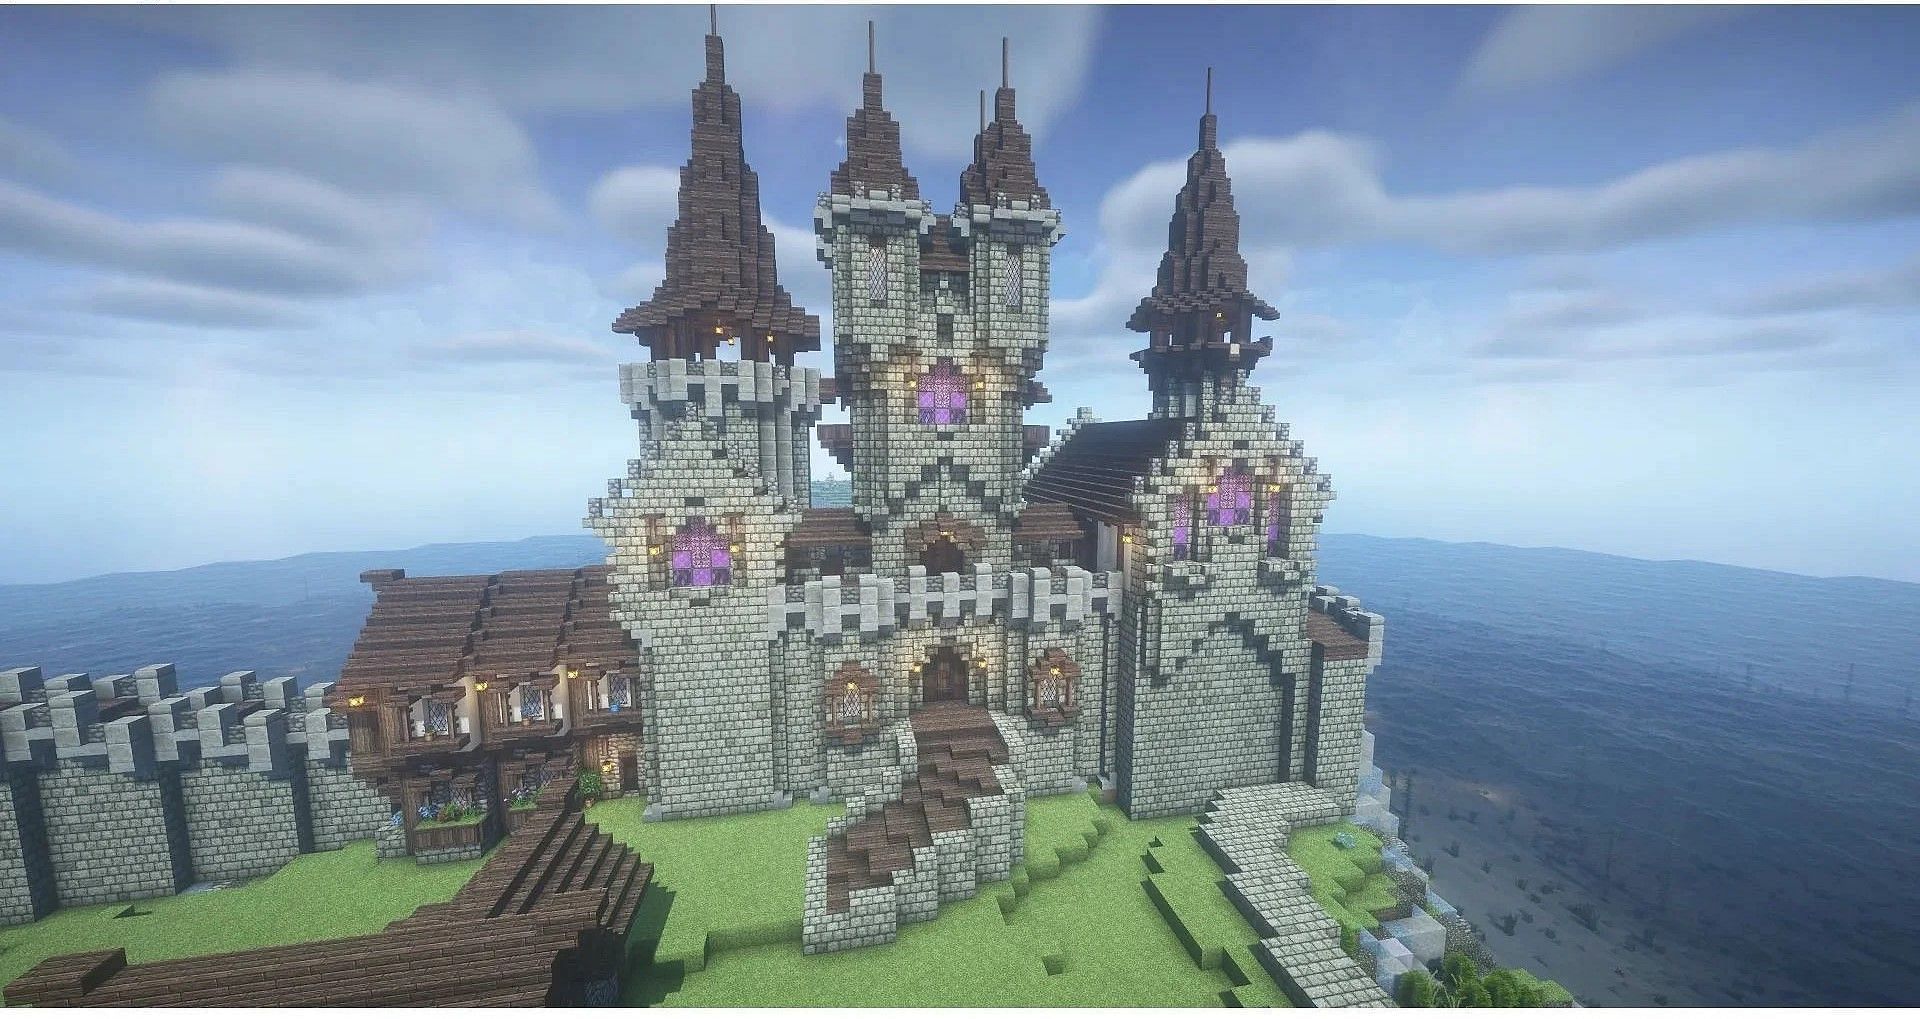 A defensive and towering castle keep (Image via Reddit/u/PalpableDefeat)